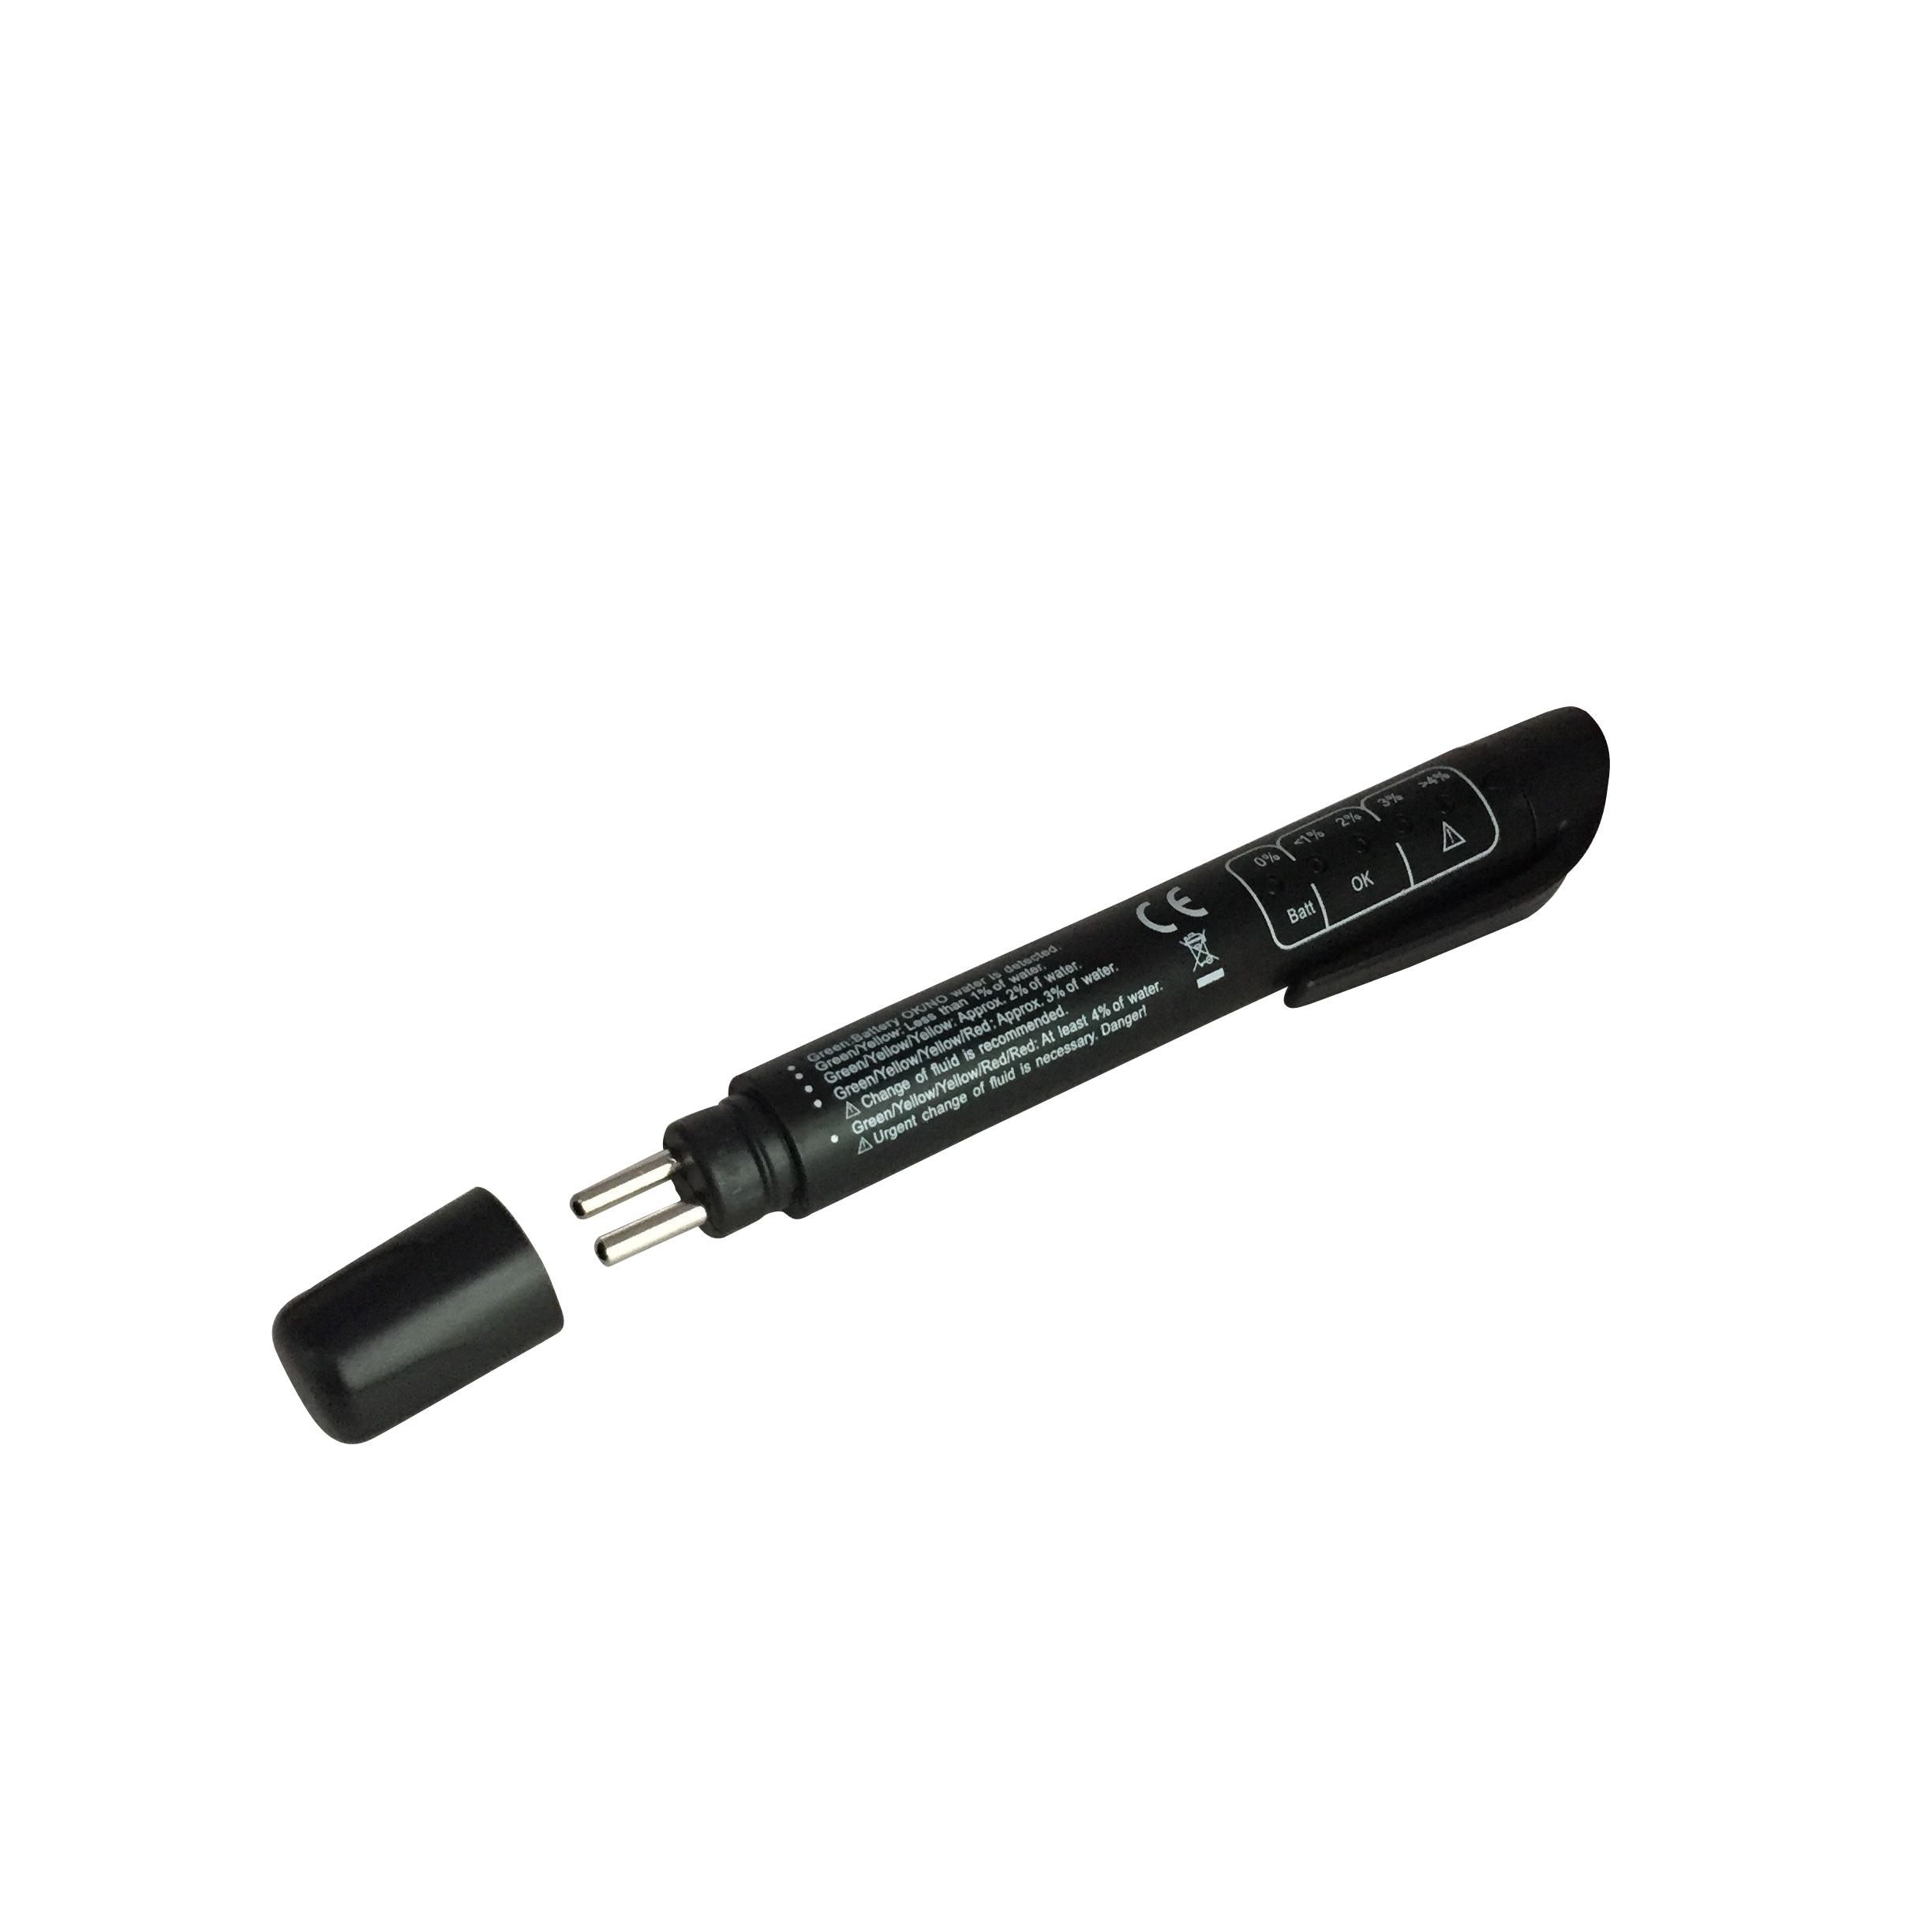 Hot sale Factory Auto Mirror For W212 -
 Car Brake Fluid Tester Pen 5 LED Auto Vehicle Automotive Testing Diagnostic Tool Electronic  – CARDILER AUTO